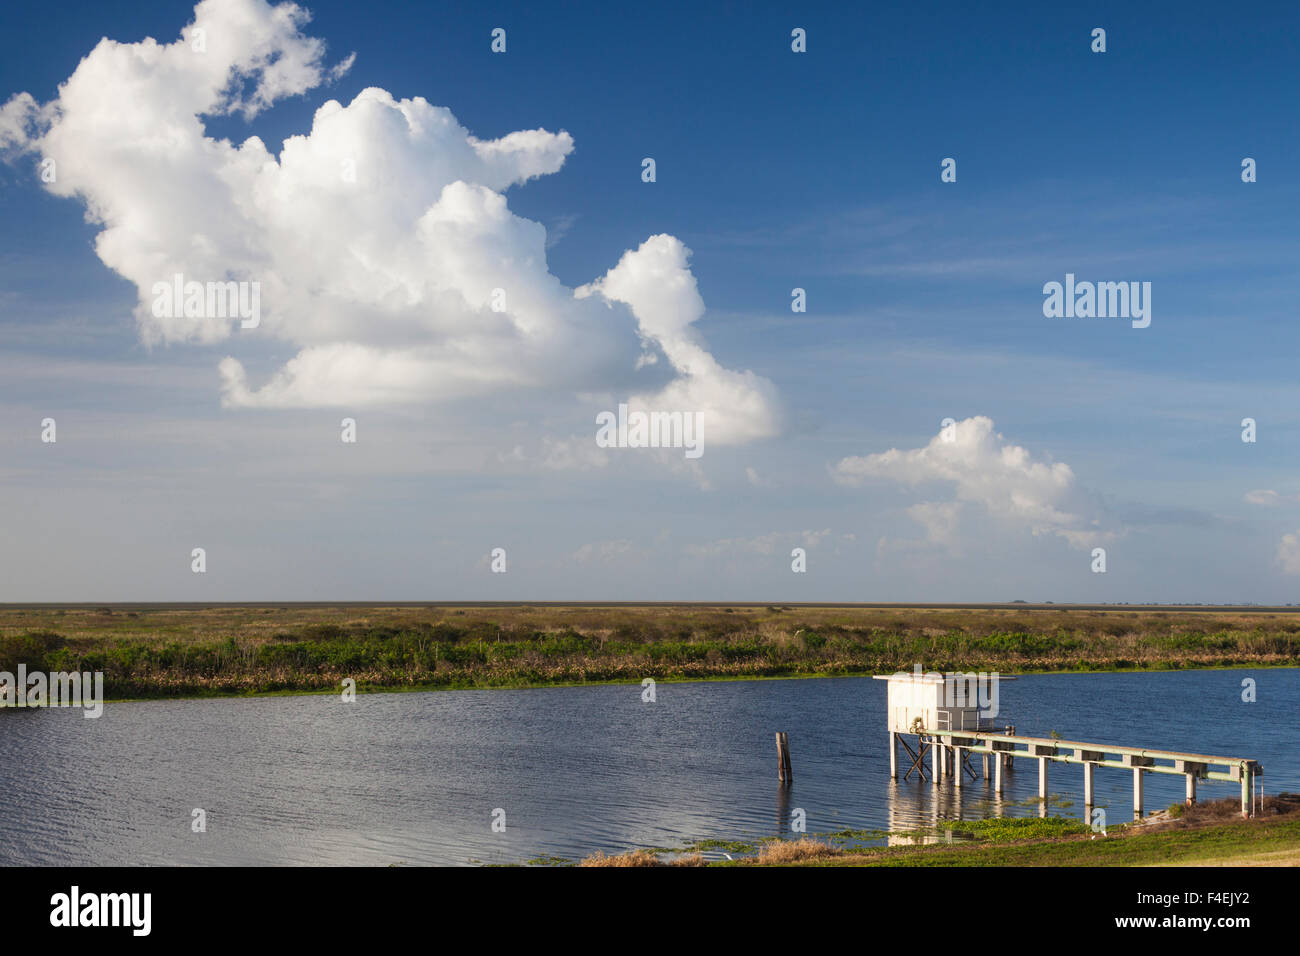 USA, Florida, Bean City, view of Lake Okeechobee. Stock Photo